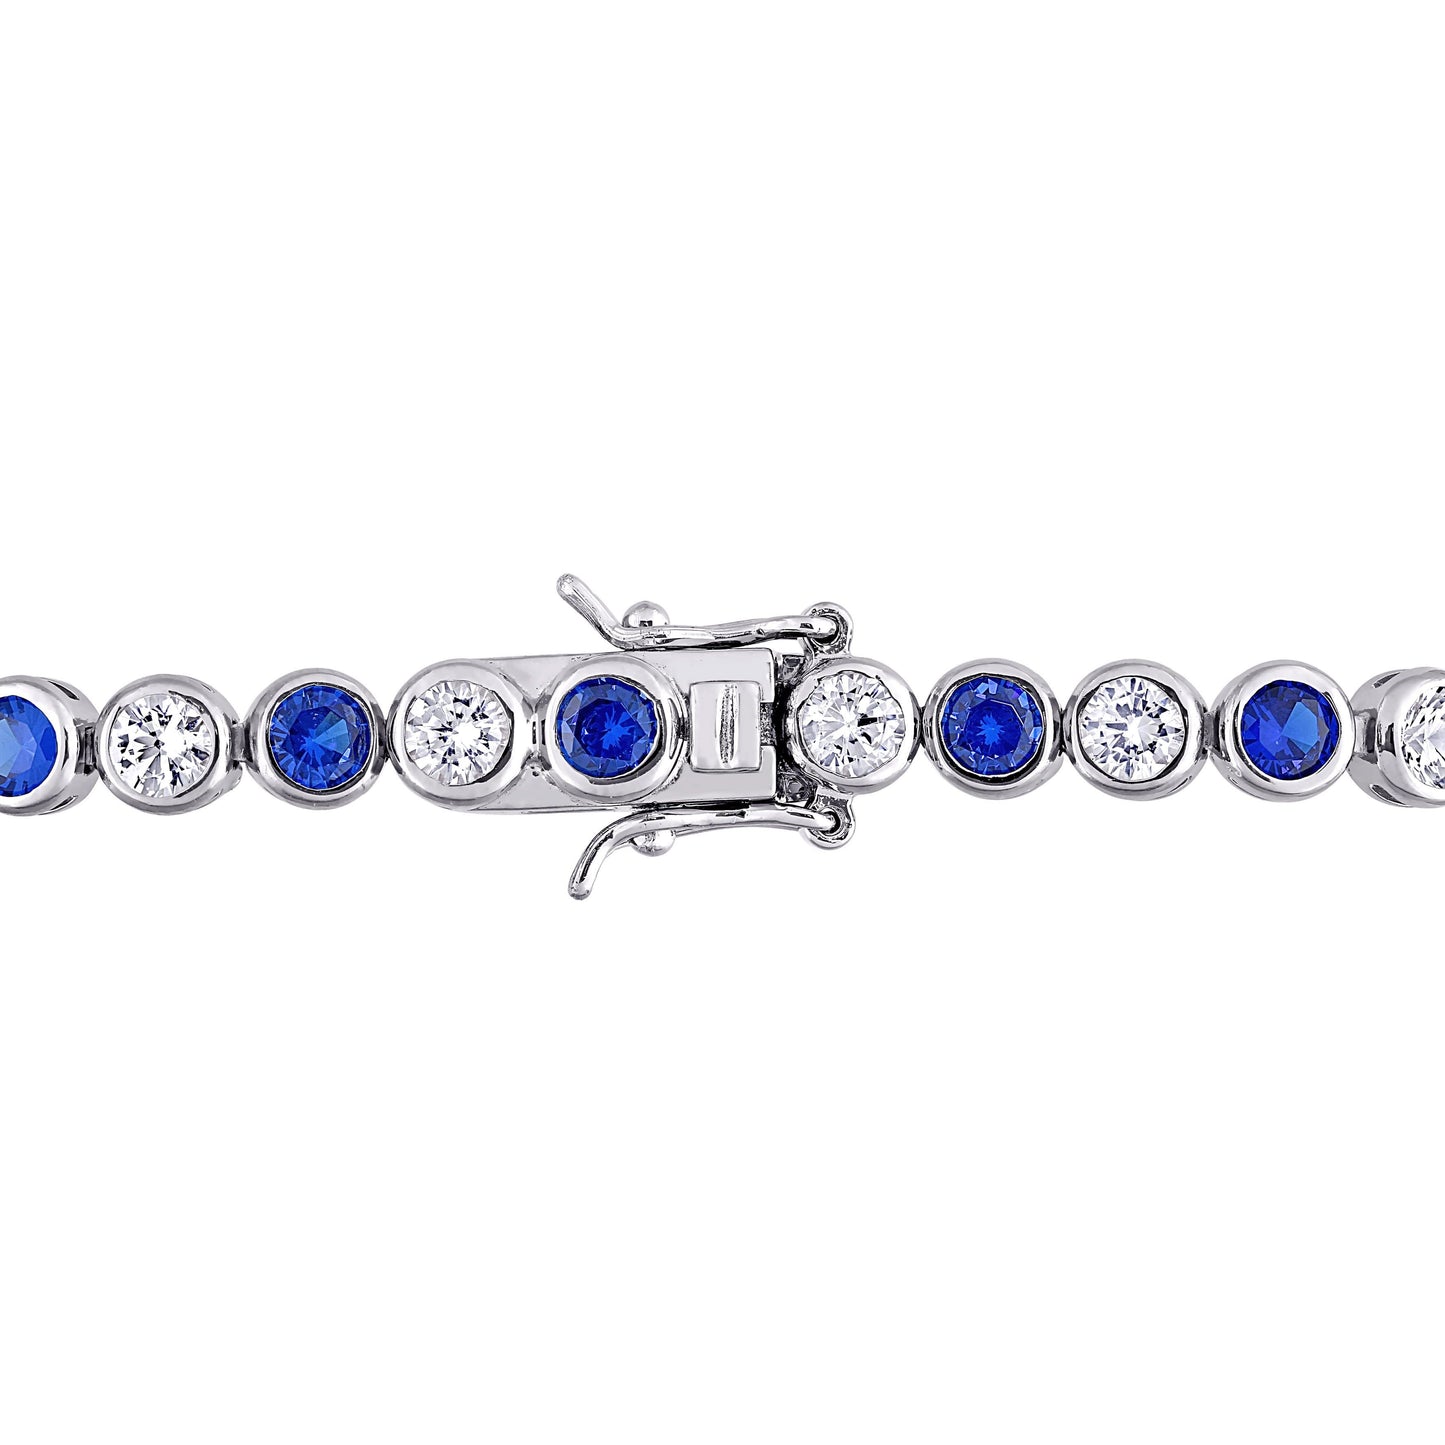 9.5ct Blue & White Sapphire Bracelet in Sterling Silver